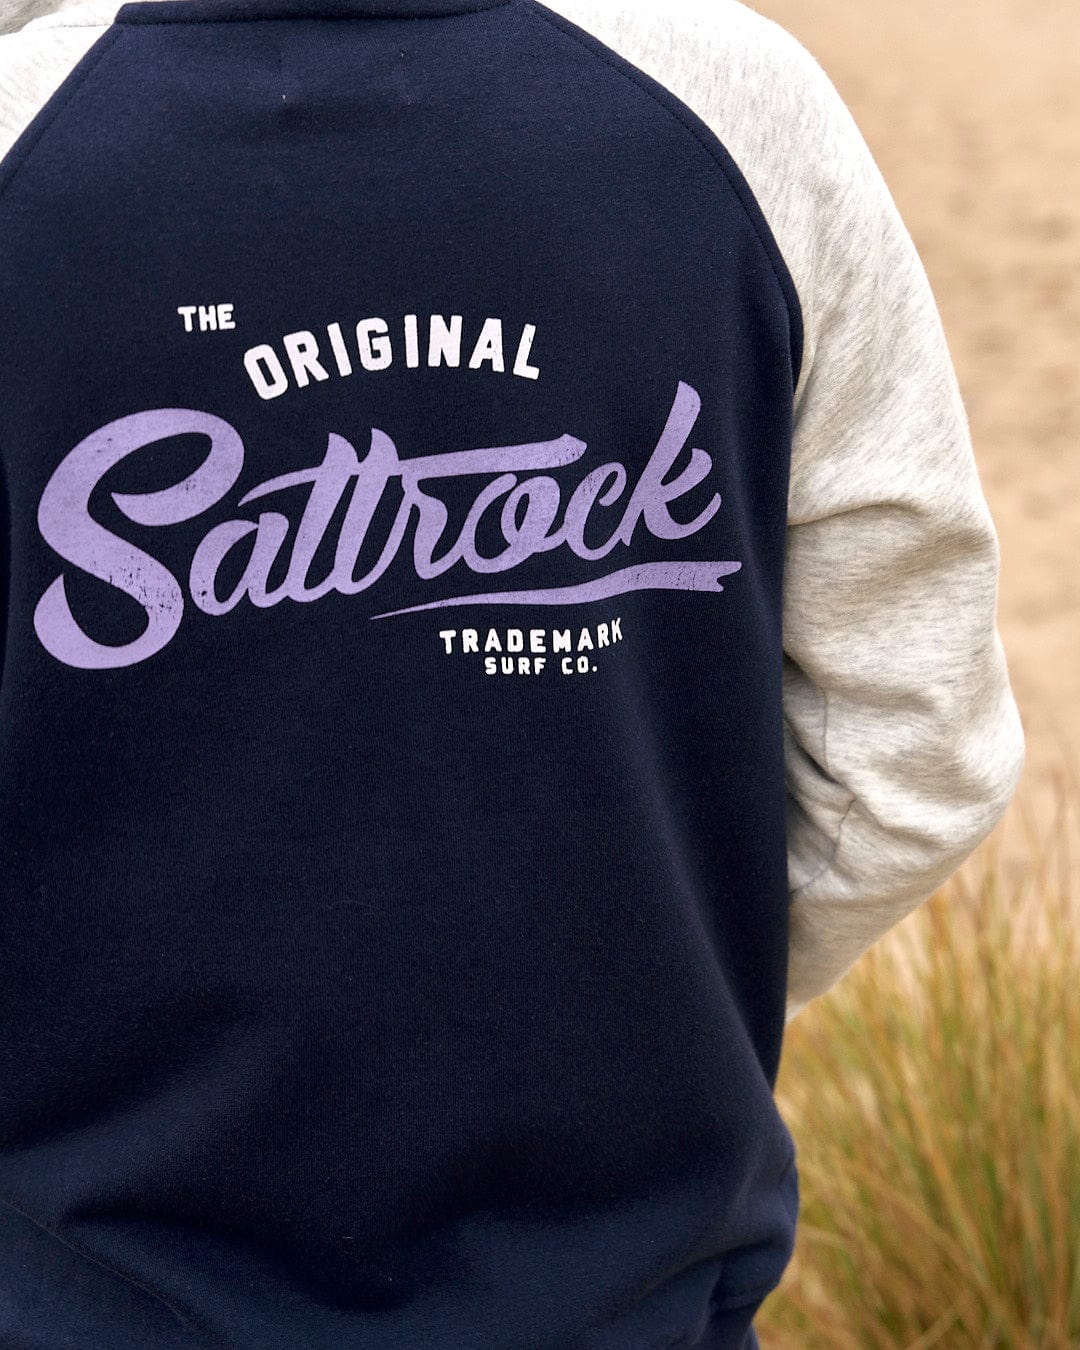 The Saltrock Trademark - Zip Hoodie - Dark Blue.